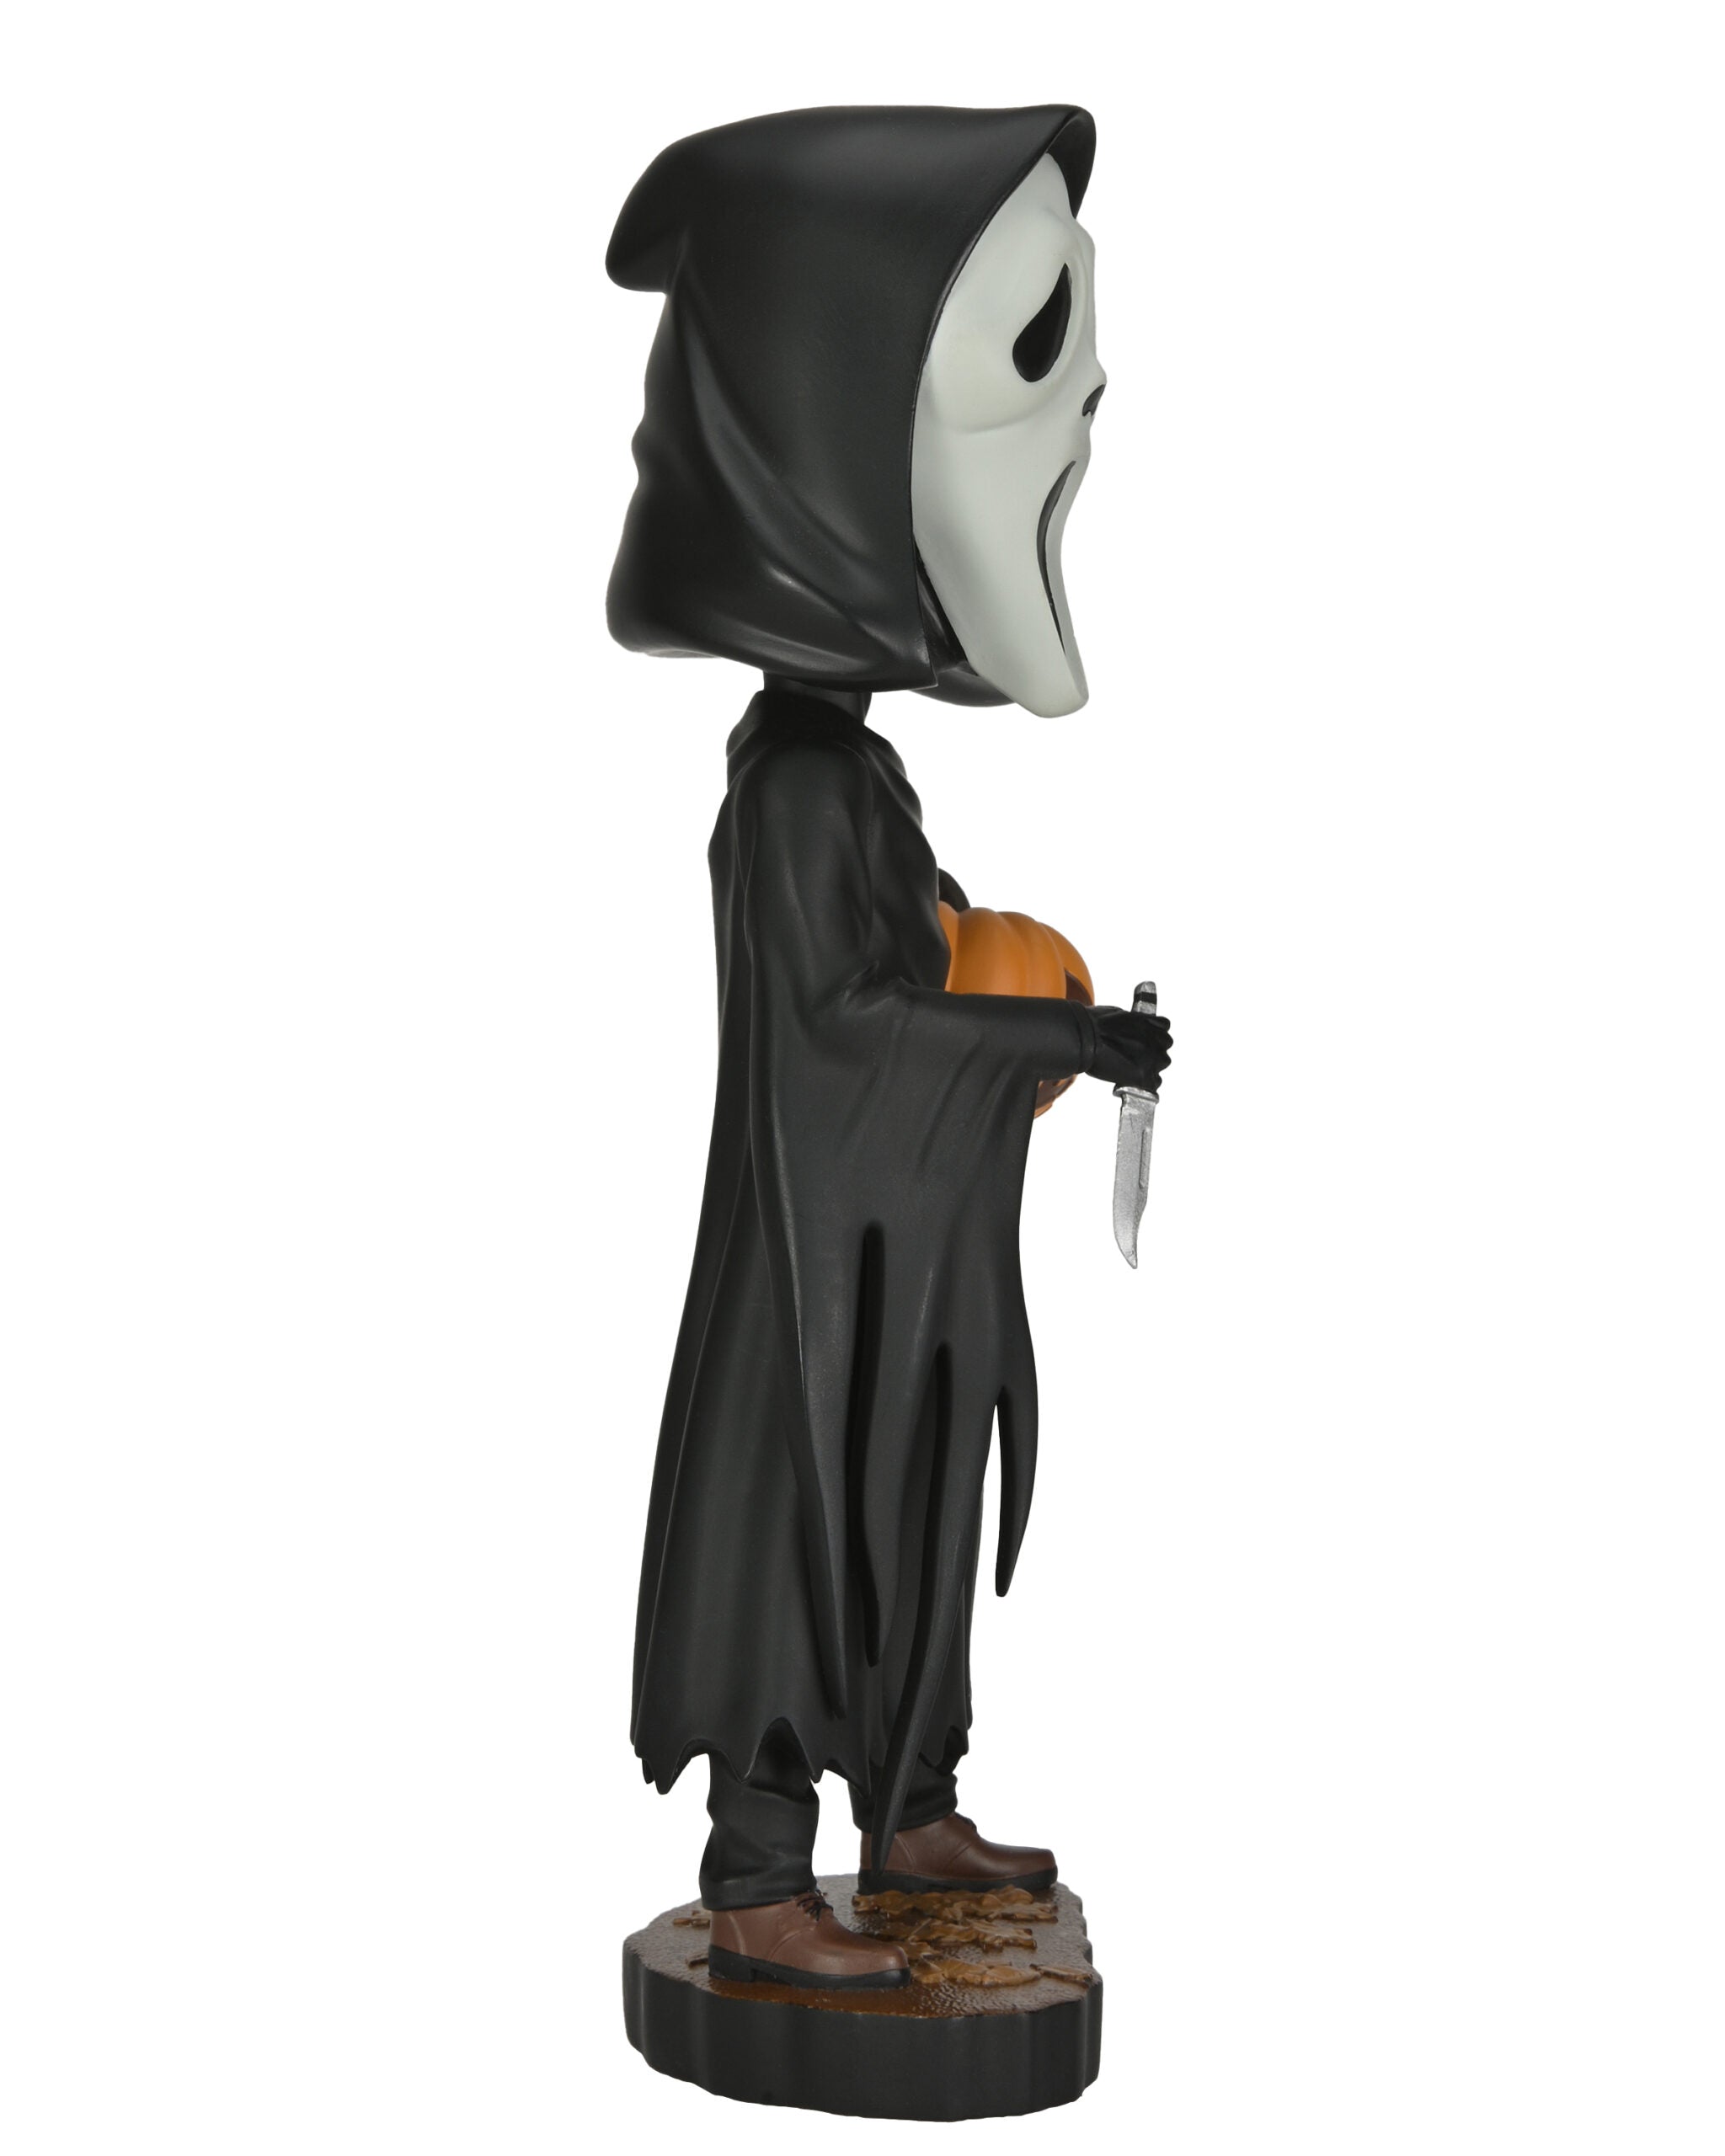 Head Knocker - Ghost Face With Pumpkin-hotRAGS.com